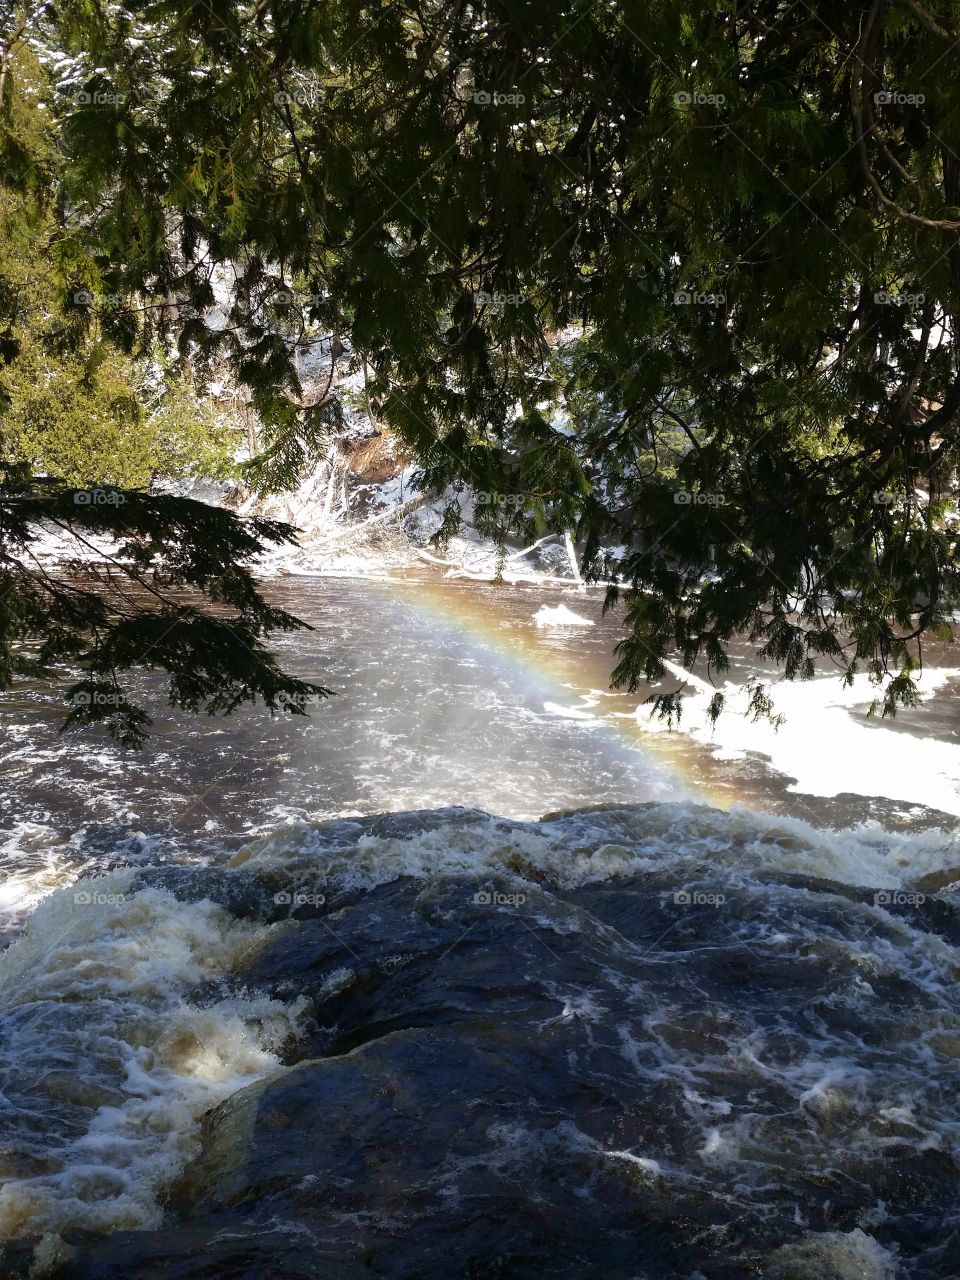 Rainbow off Presque Isle River falls